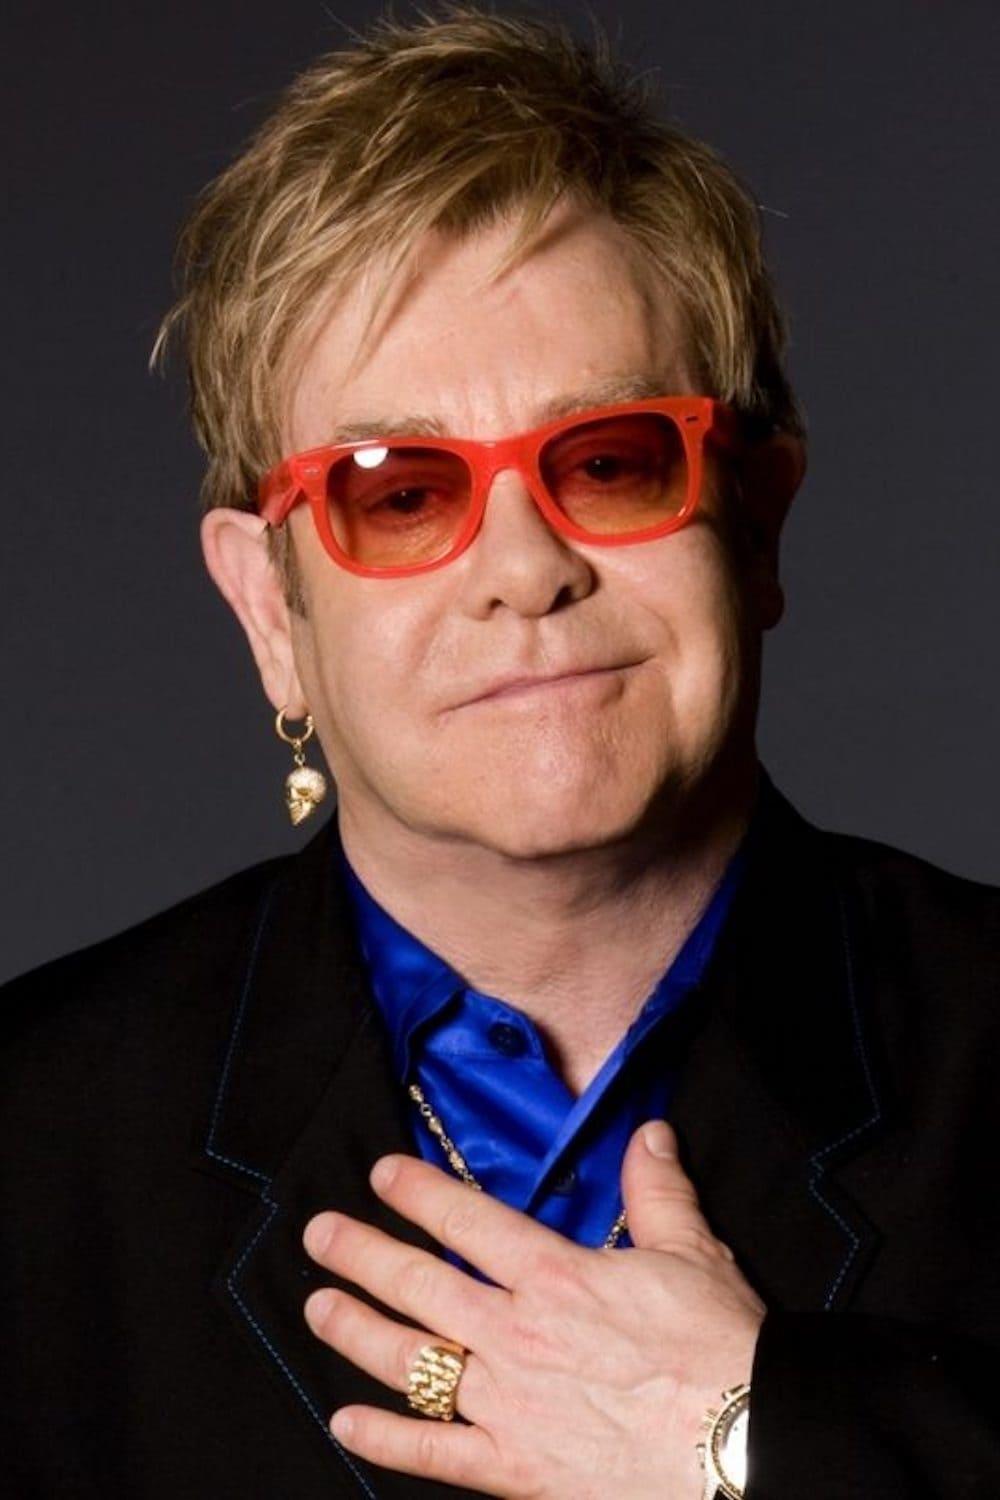 Elton John poster